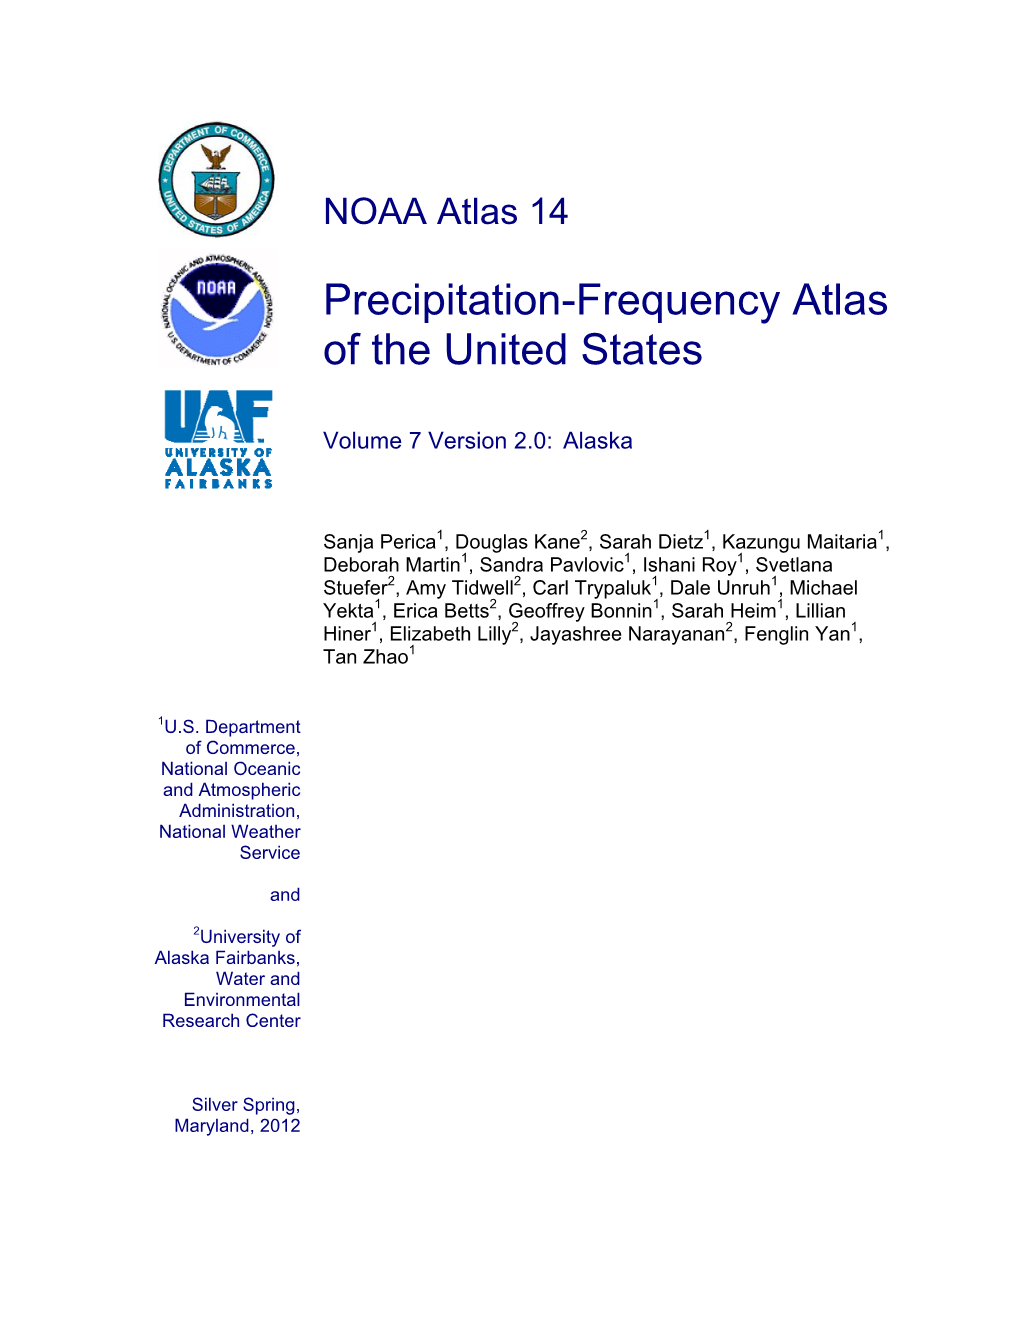 NOAA Atlas 14 Vol 7